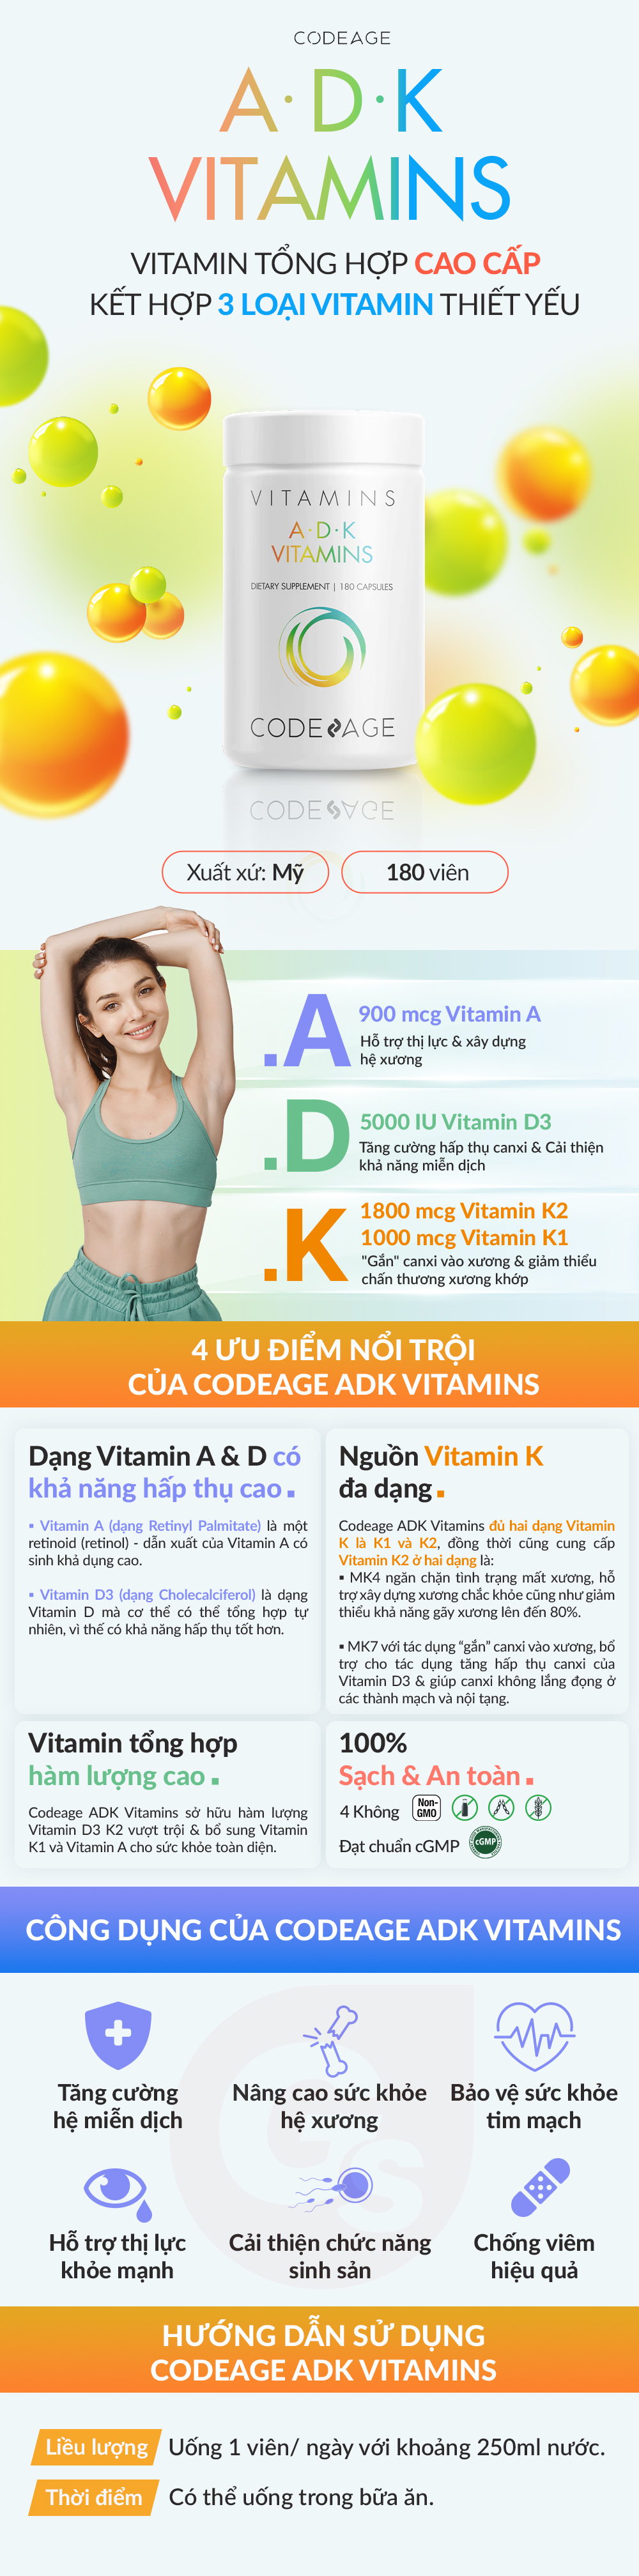 codeage-adk-vitamins-ho-tro-suc-khoe-toan-dien-gymstore